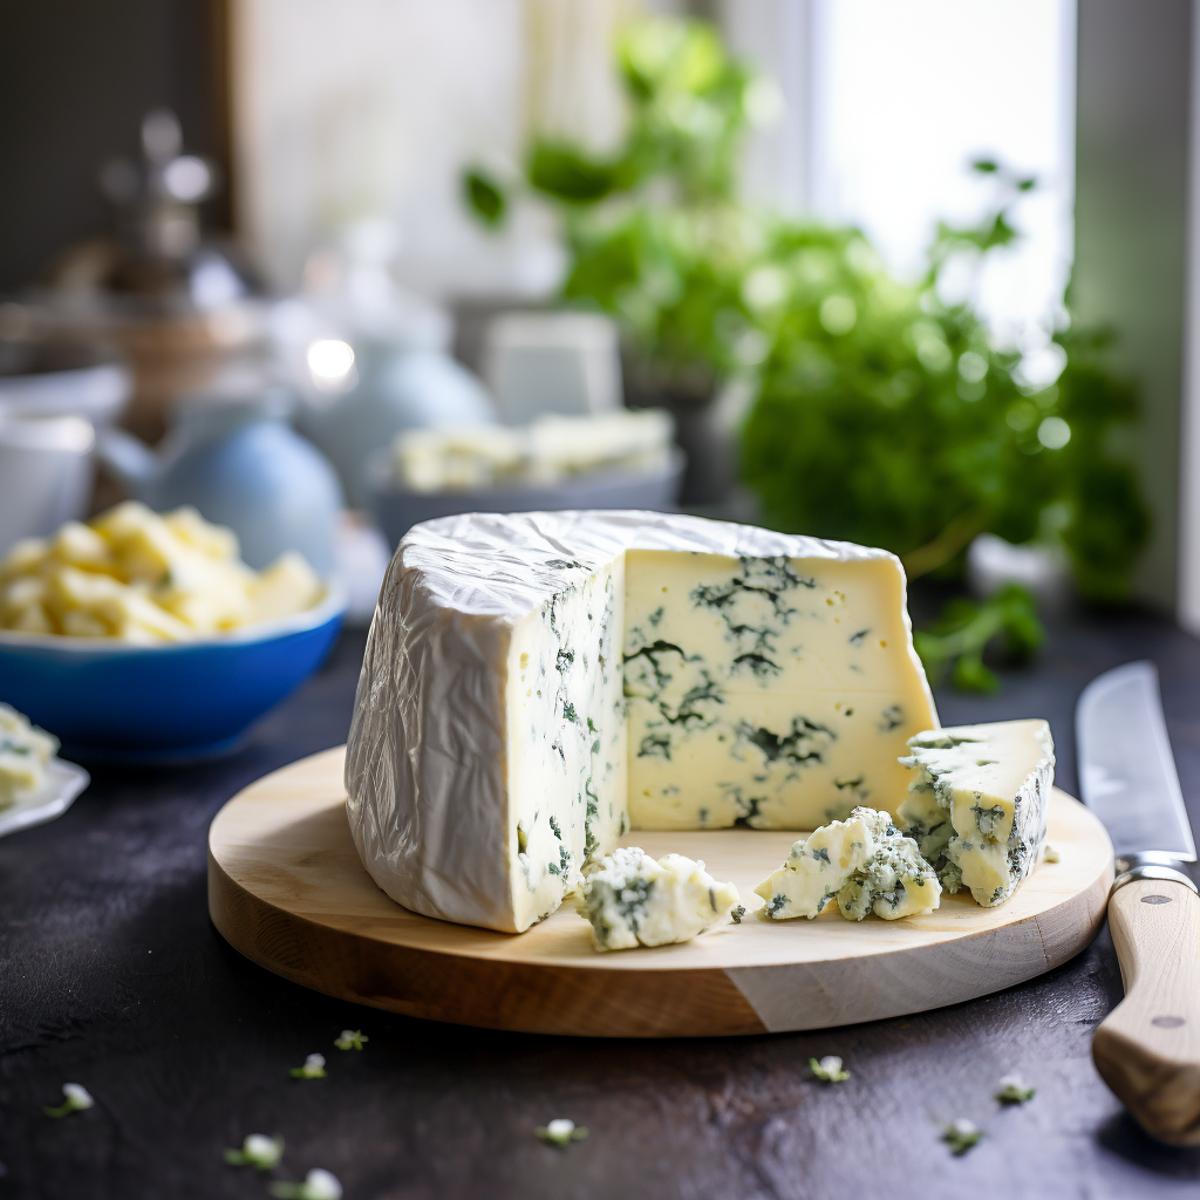 Gorgonzola Cheese on a kitchen counter